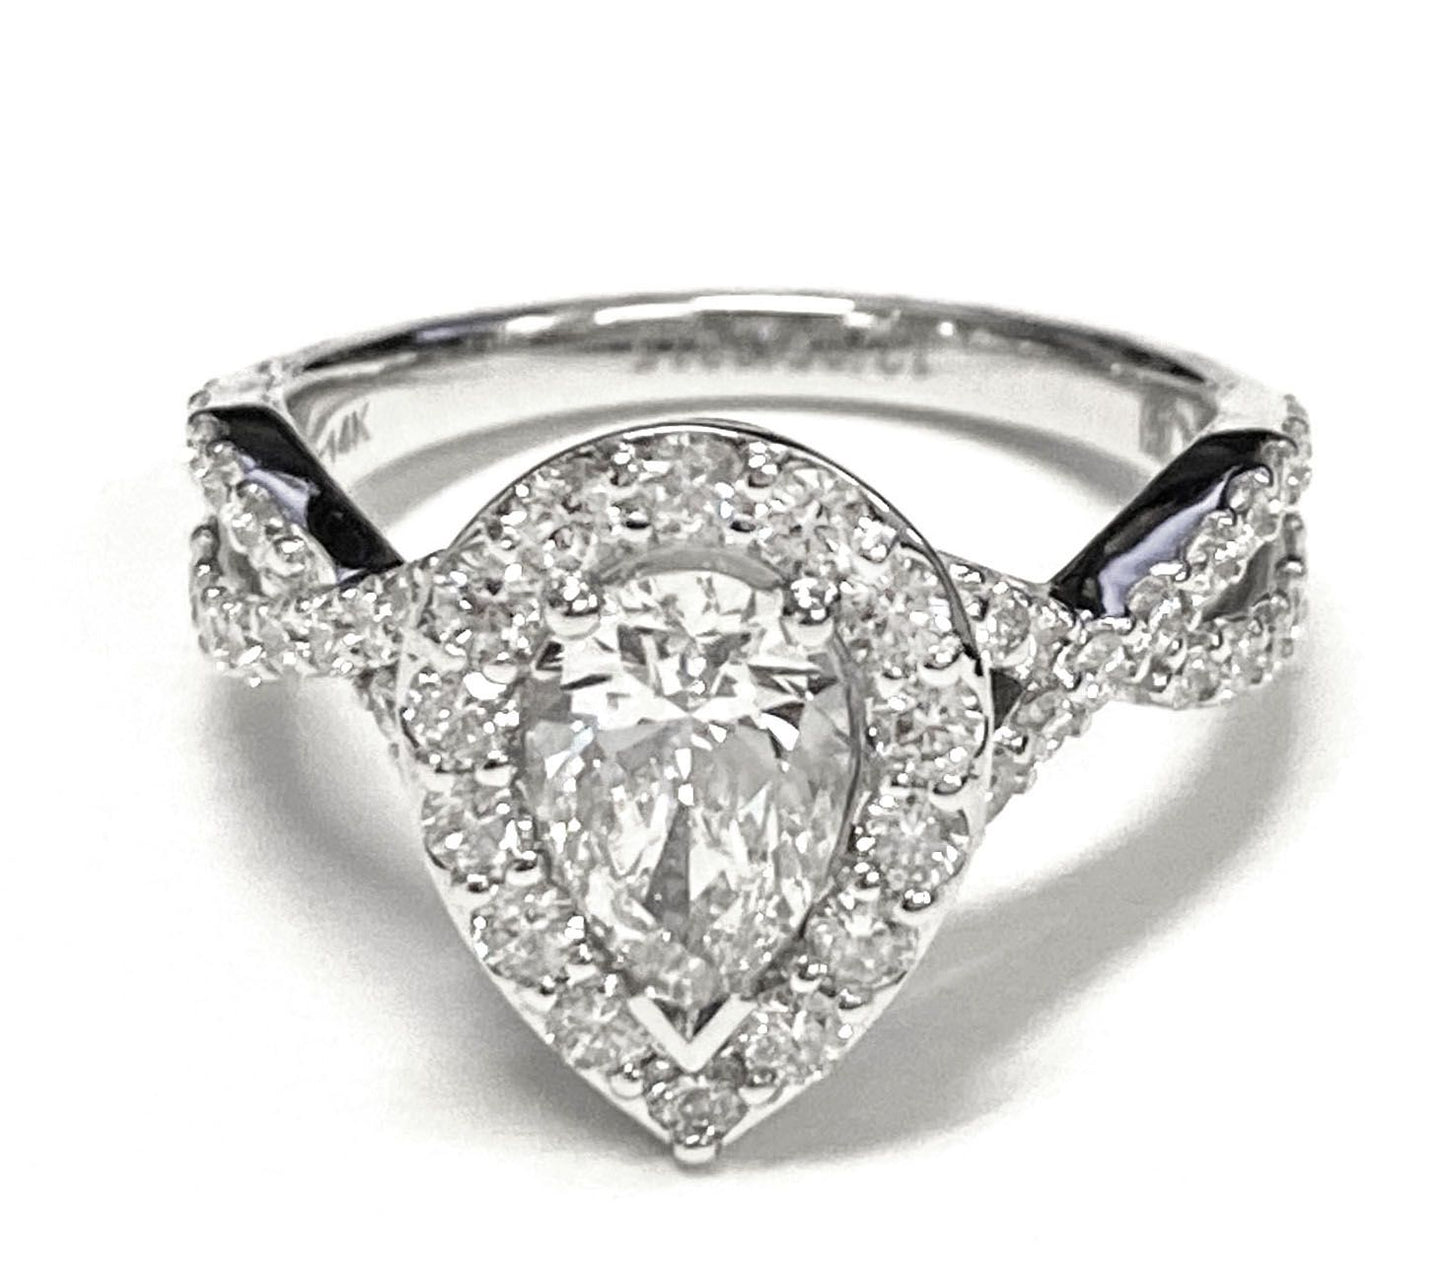 14K Yellow Gold Pear Shape Center Twisted Open Lattice Diamond Halo Engagement Ring -3/4ctw